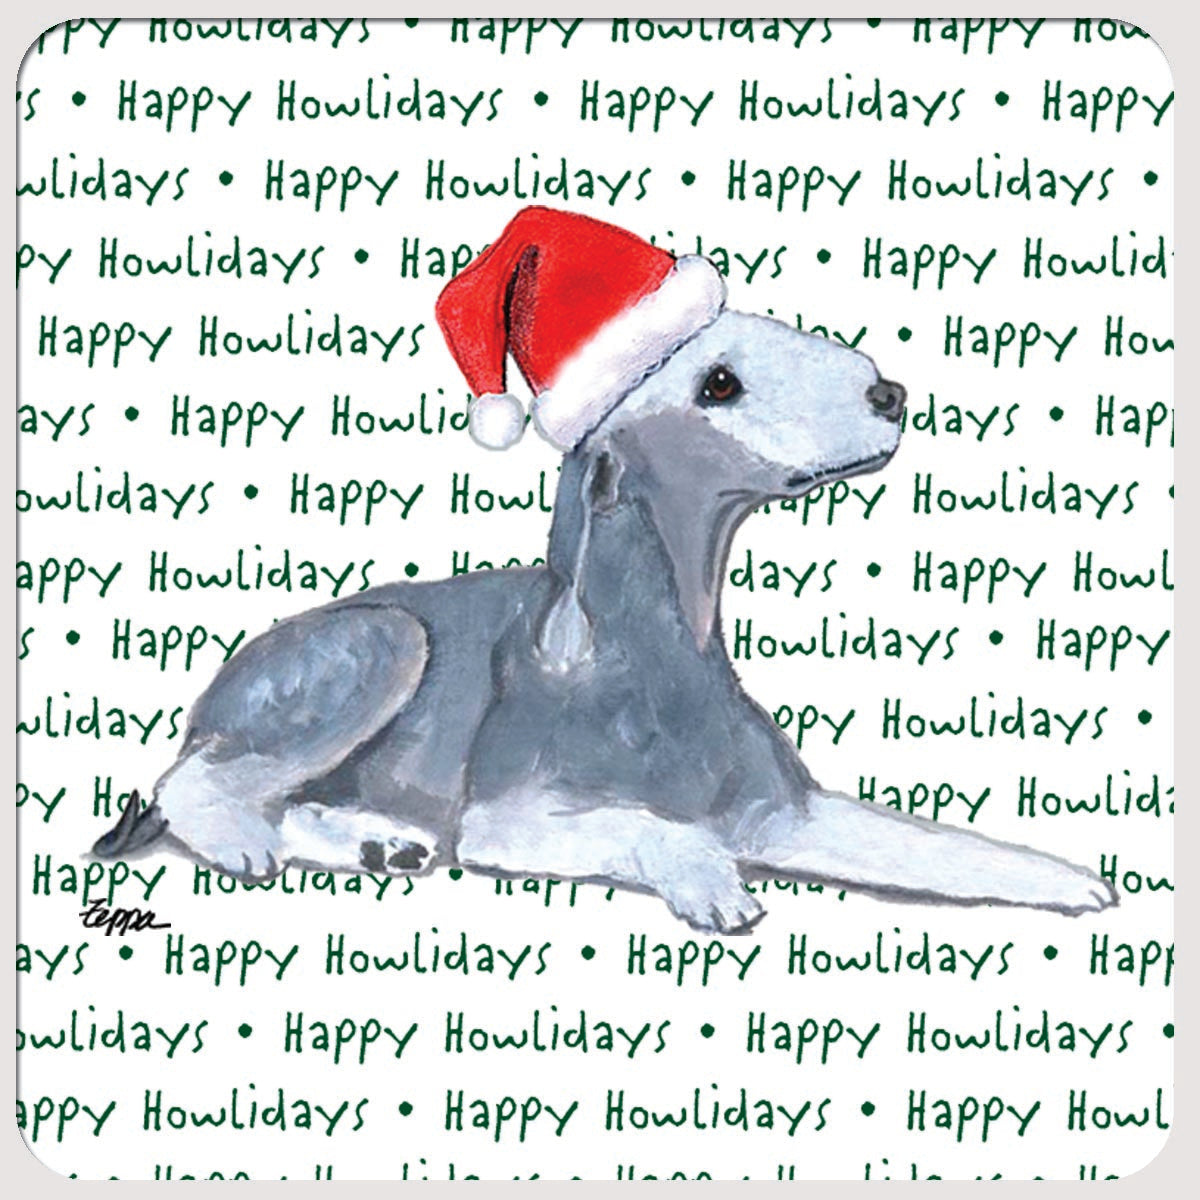 Bedlington Terrier Christmas Coasters